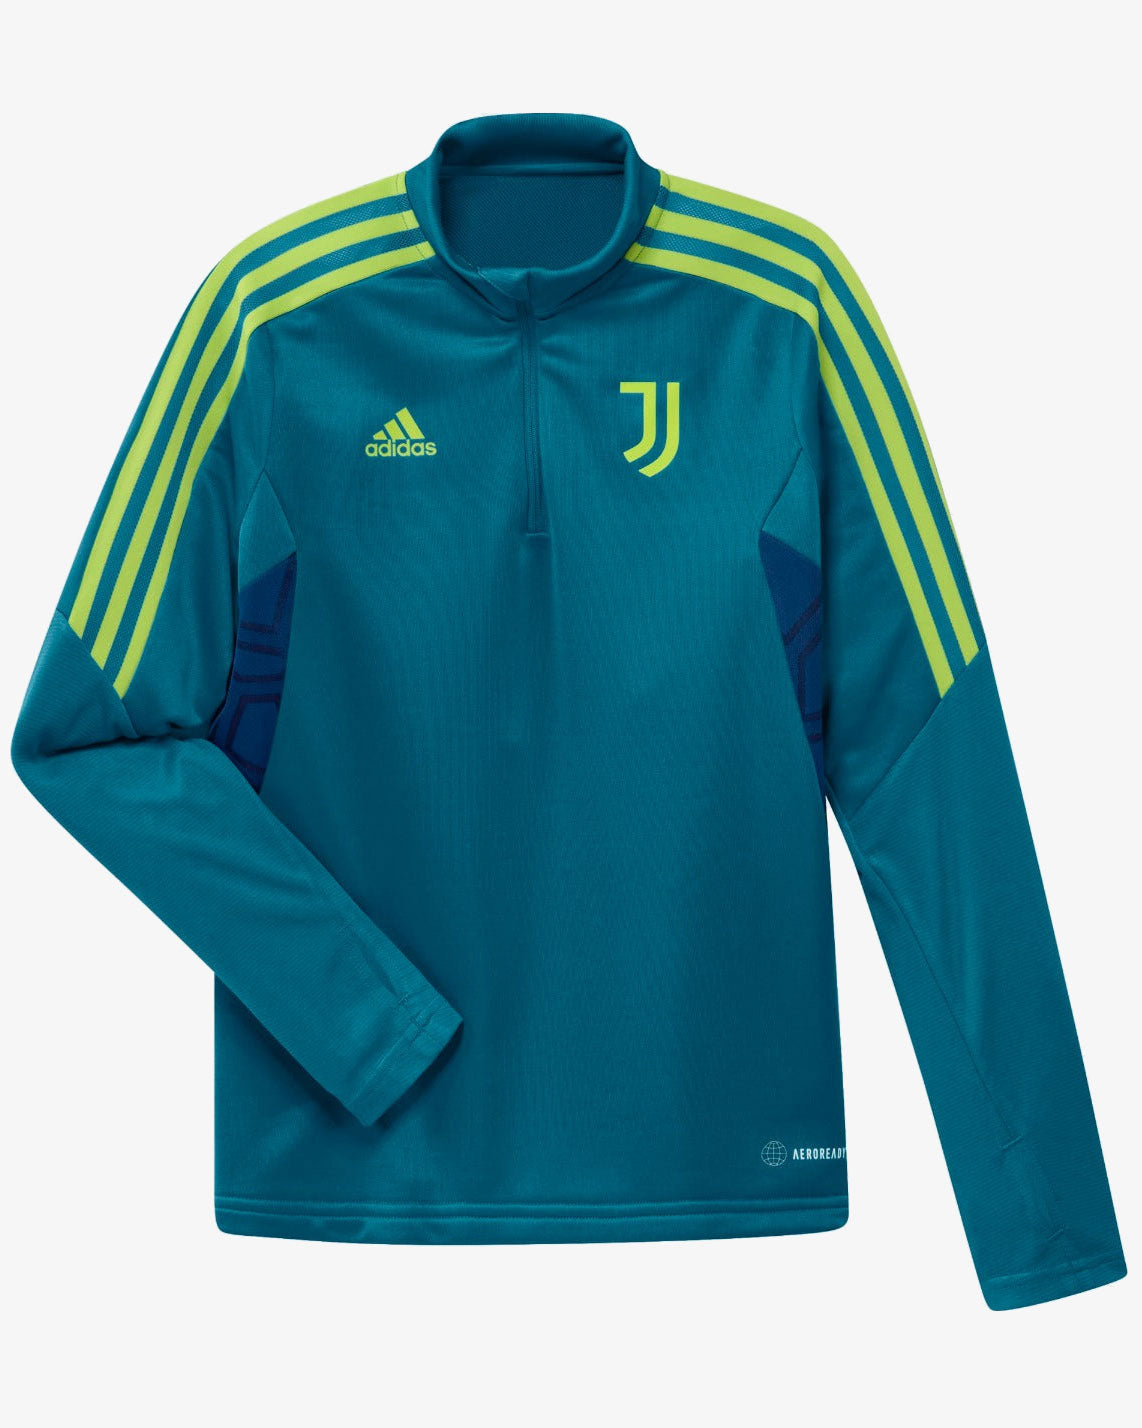 Juventus junior training top 2022/2023 - Blue/Green